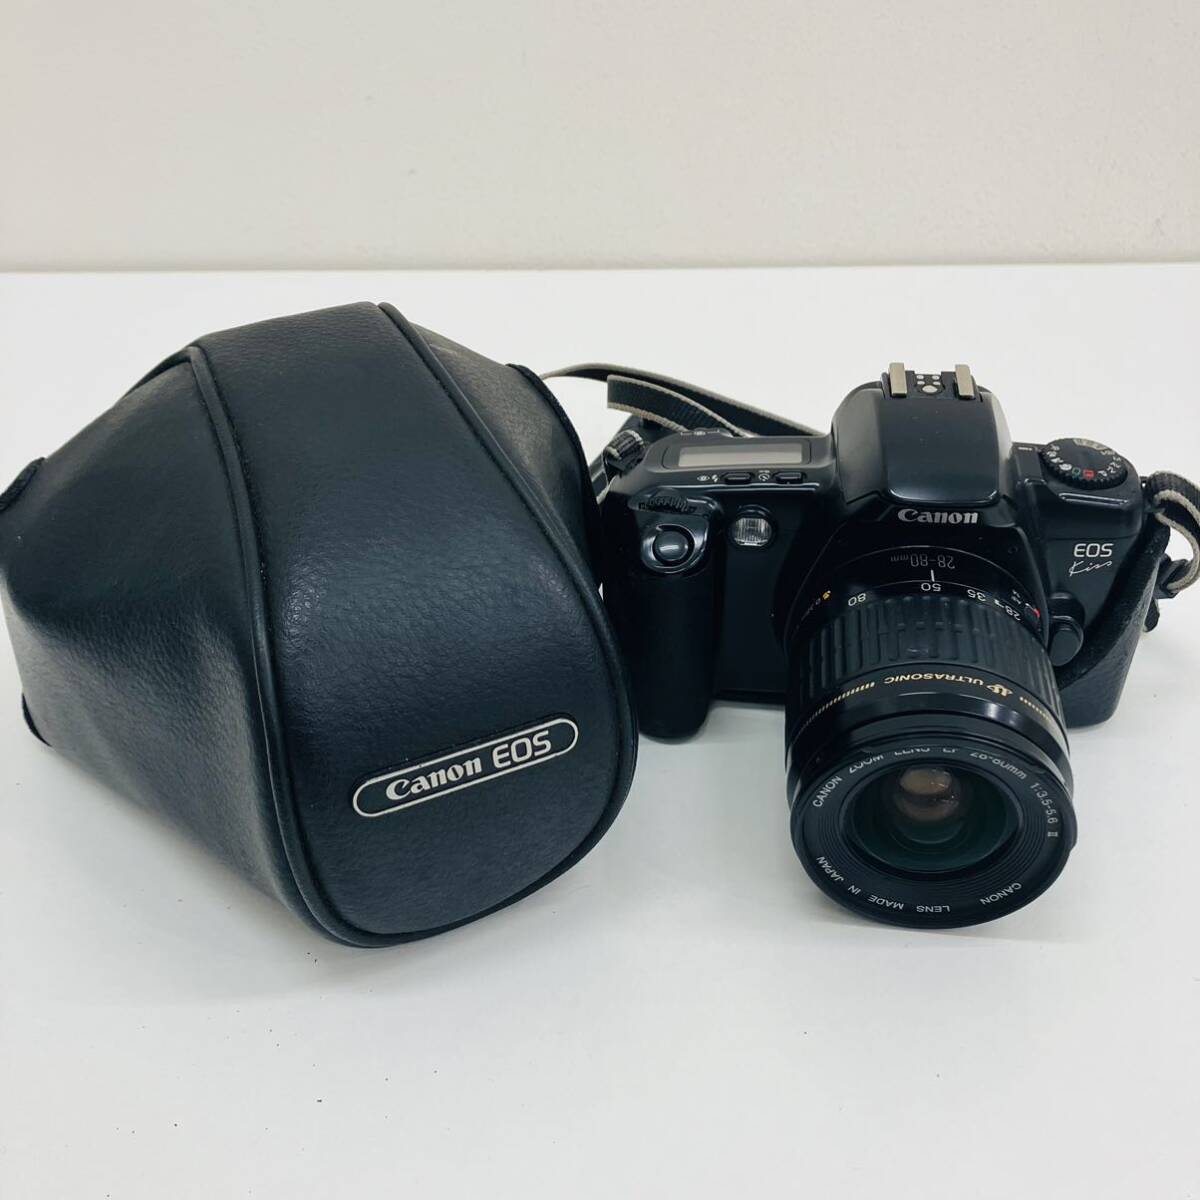 Canon Canon EOS Lens Пленочный фотоаппарат SLR LENS EF:28-80mm 1:3.5-5.6 II. УЛЬТРАЗВУКОВОЙ